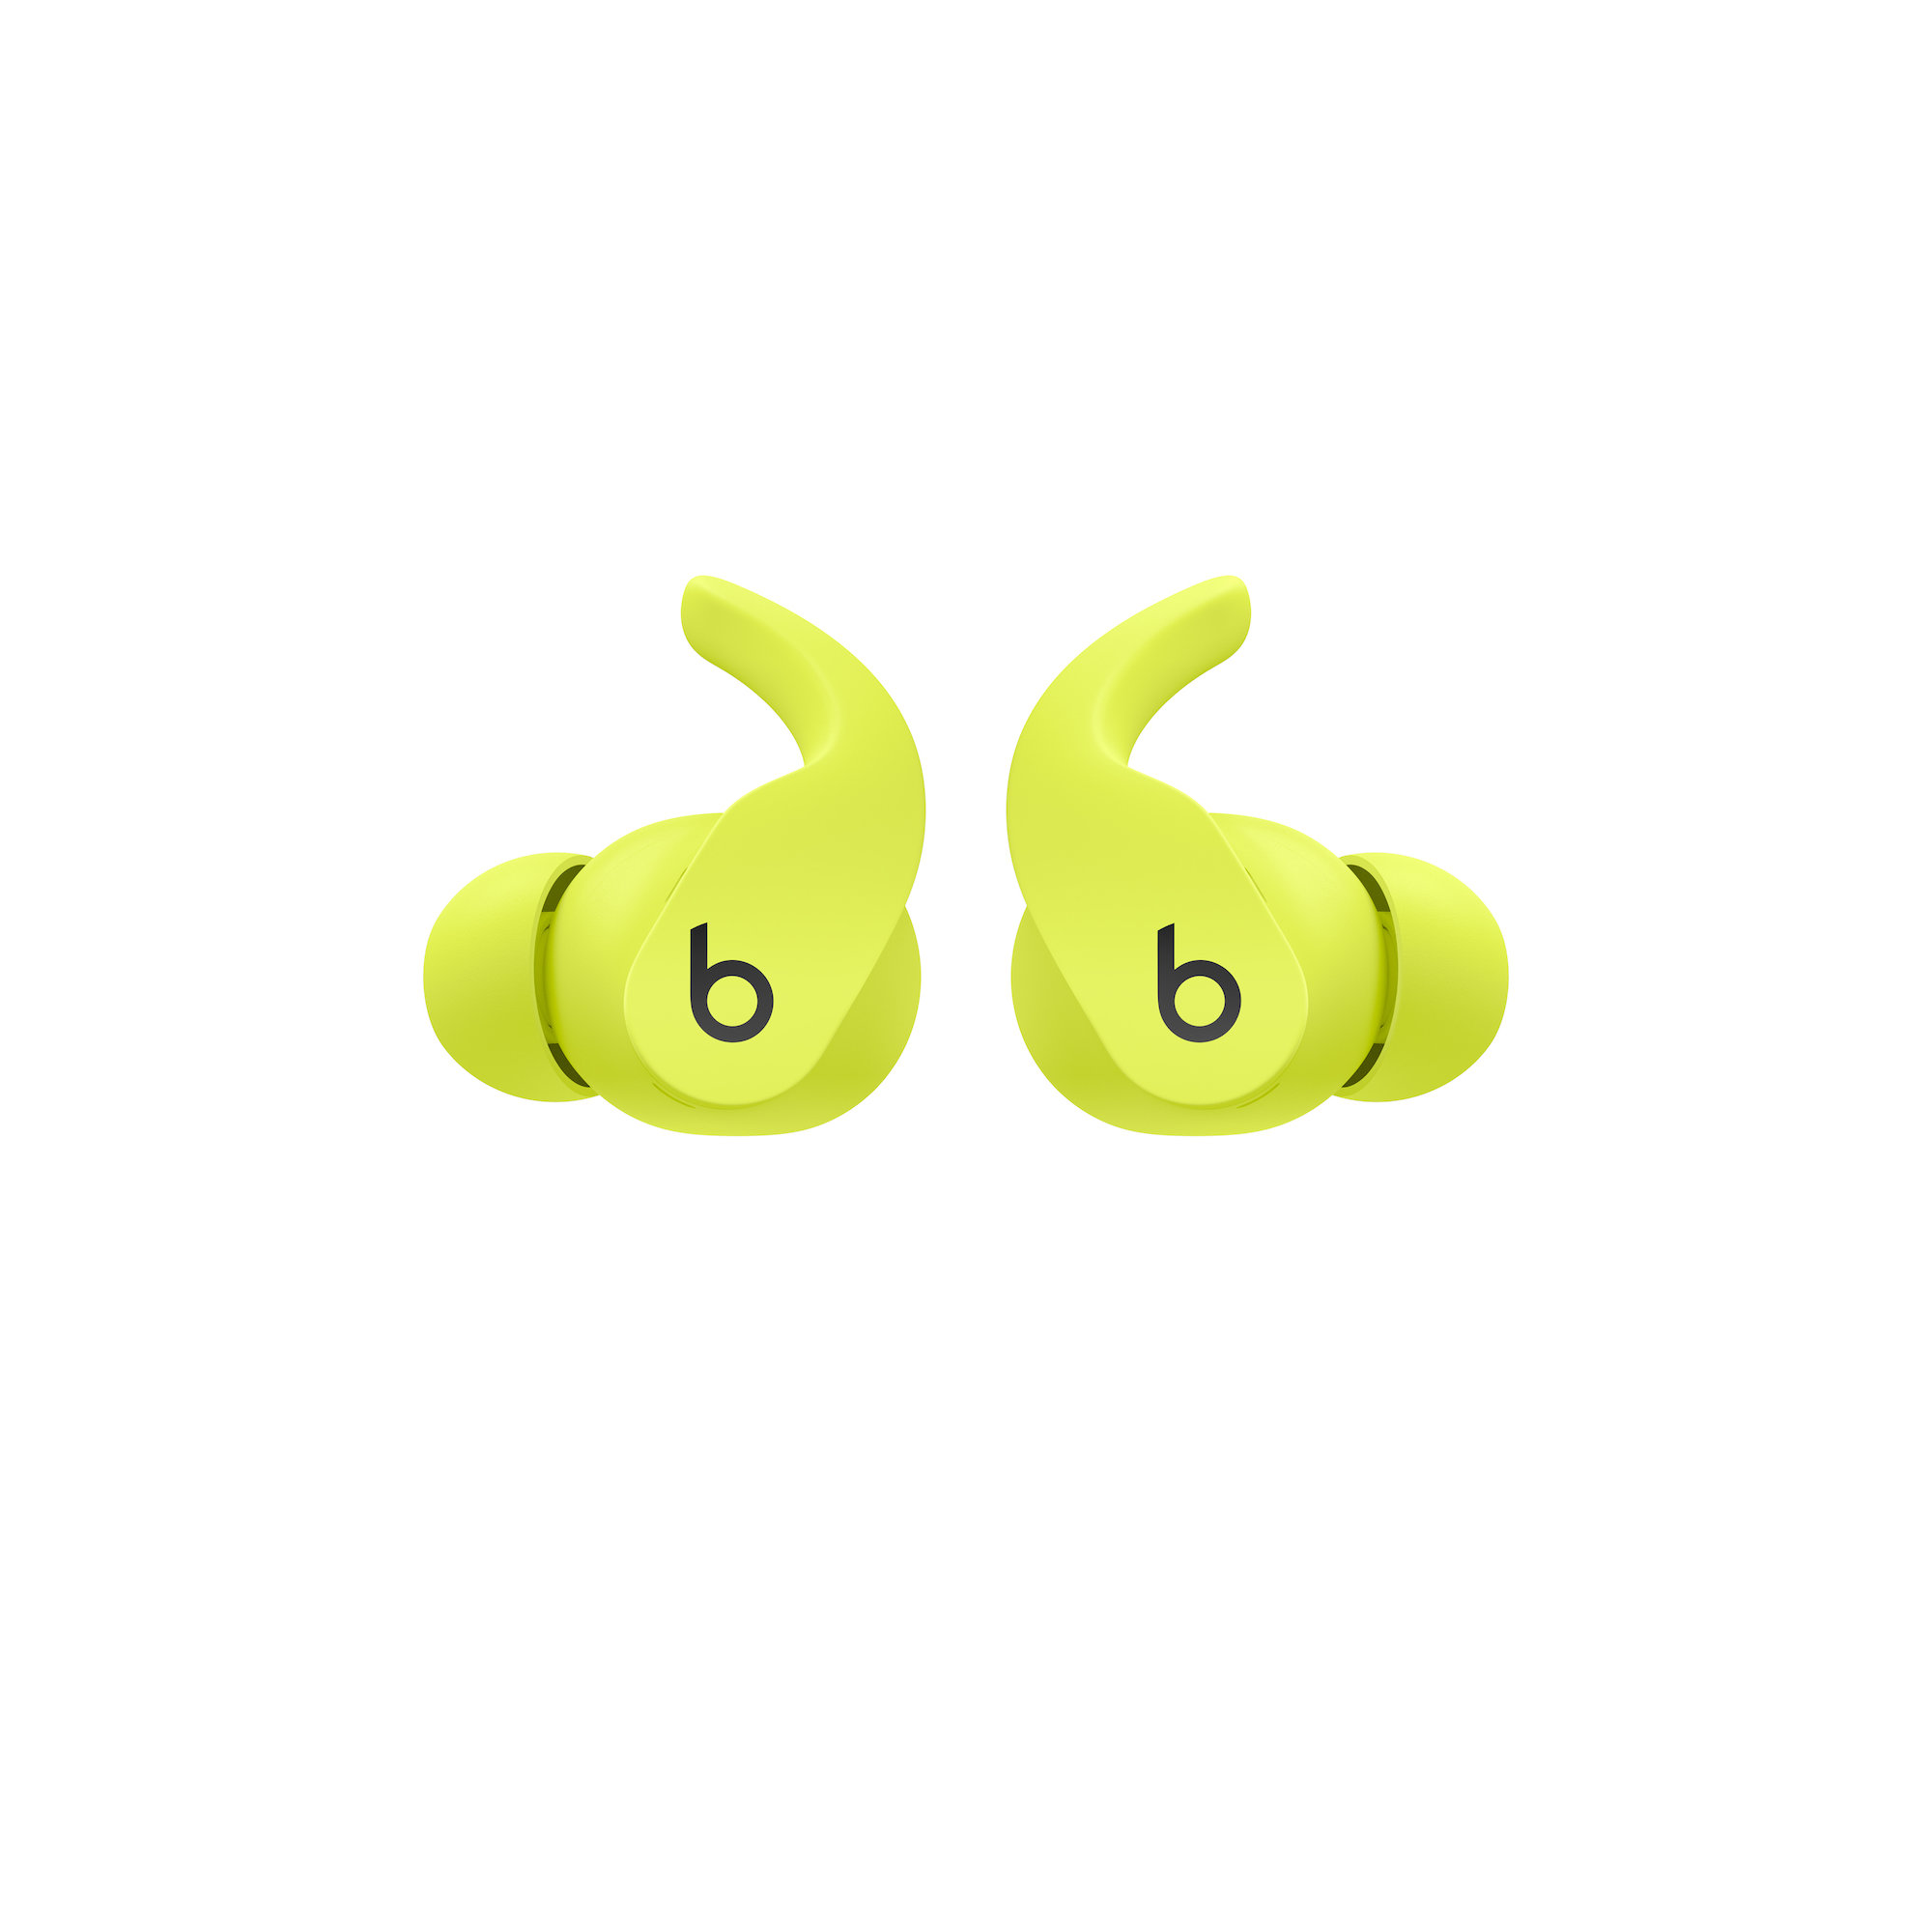 Beats Fit Pro True Wireless Earbuds - Volt Yellow